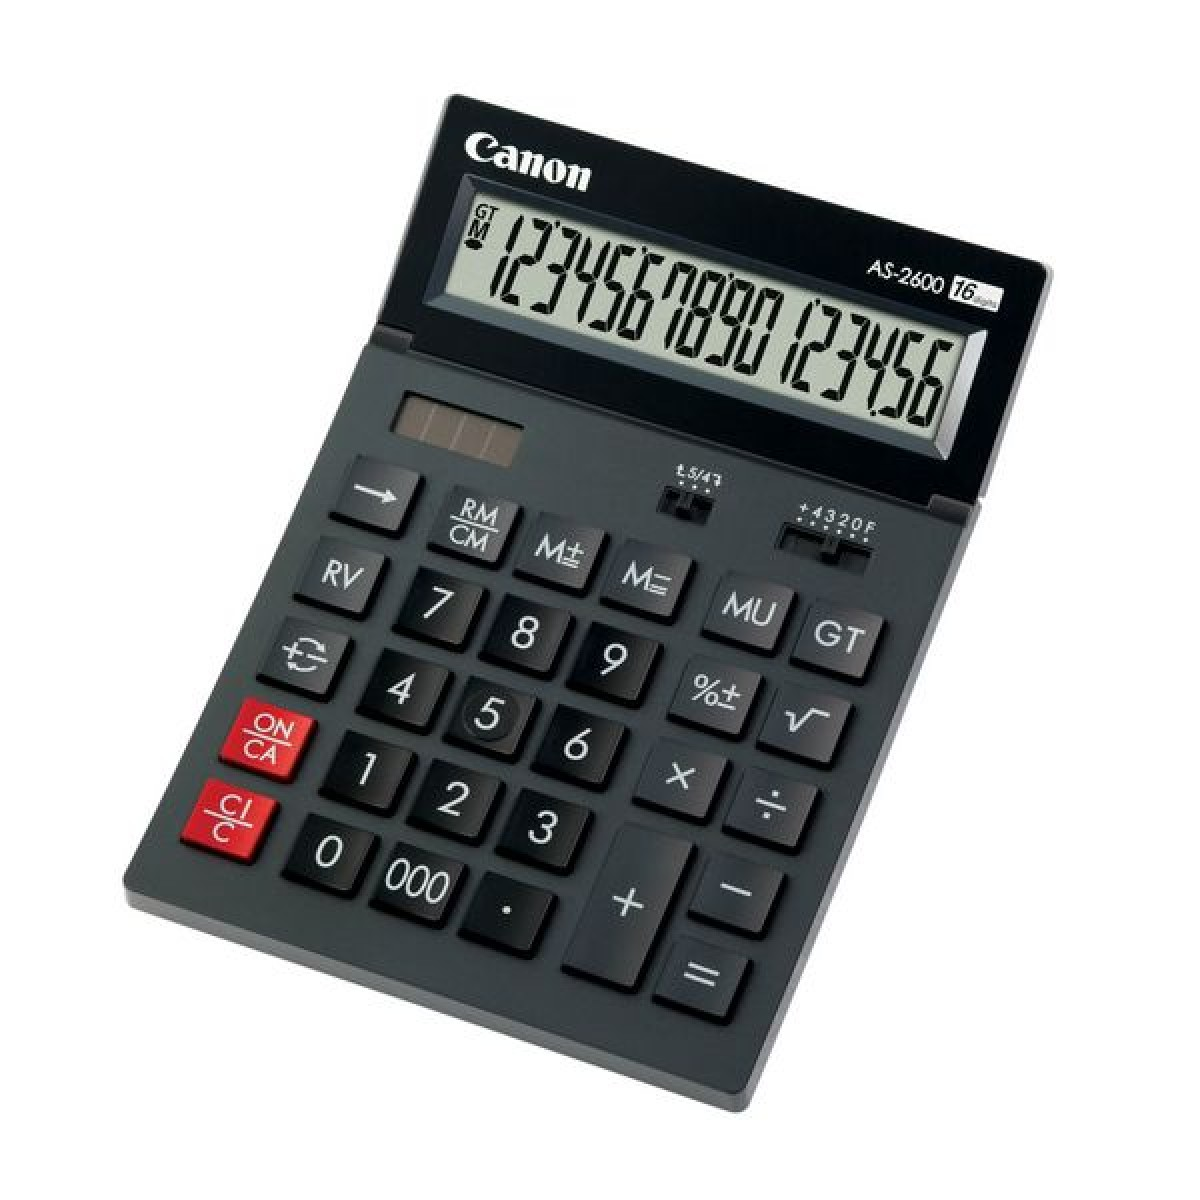 Canon Calculator AS2600 (16 Digits)